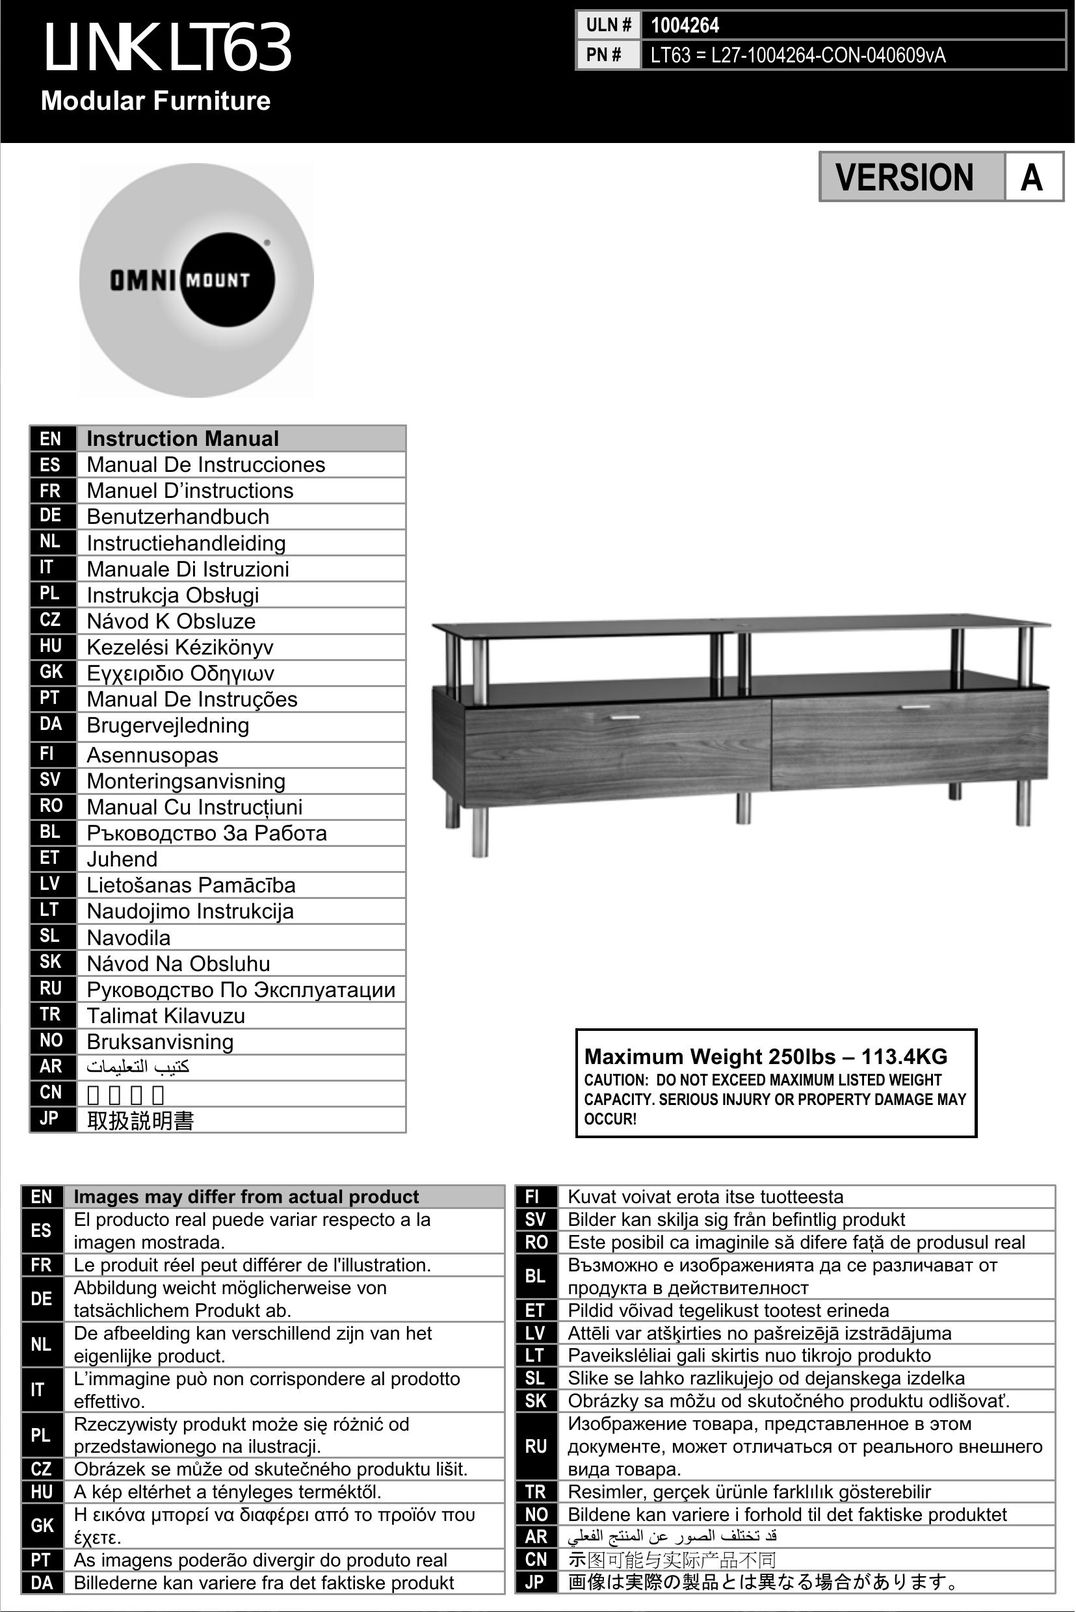 Omnimount LINK LT63 Indoor Furnishings User Manual